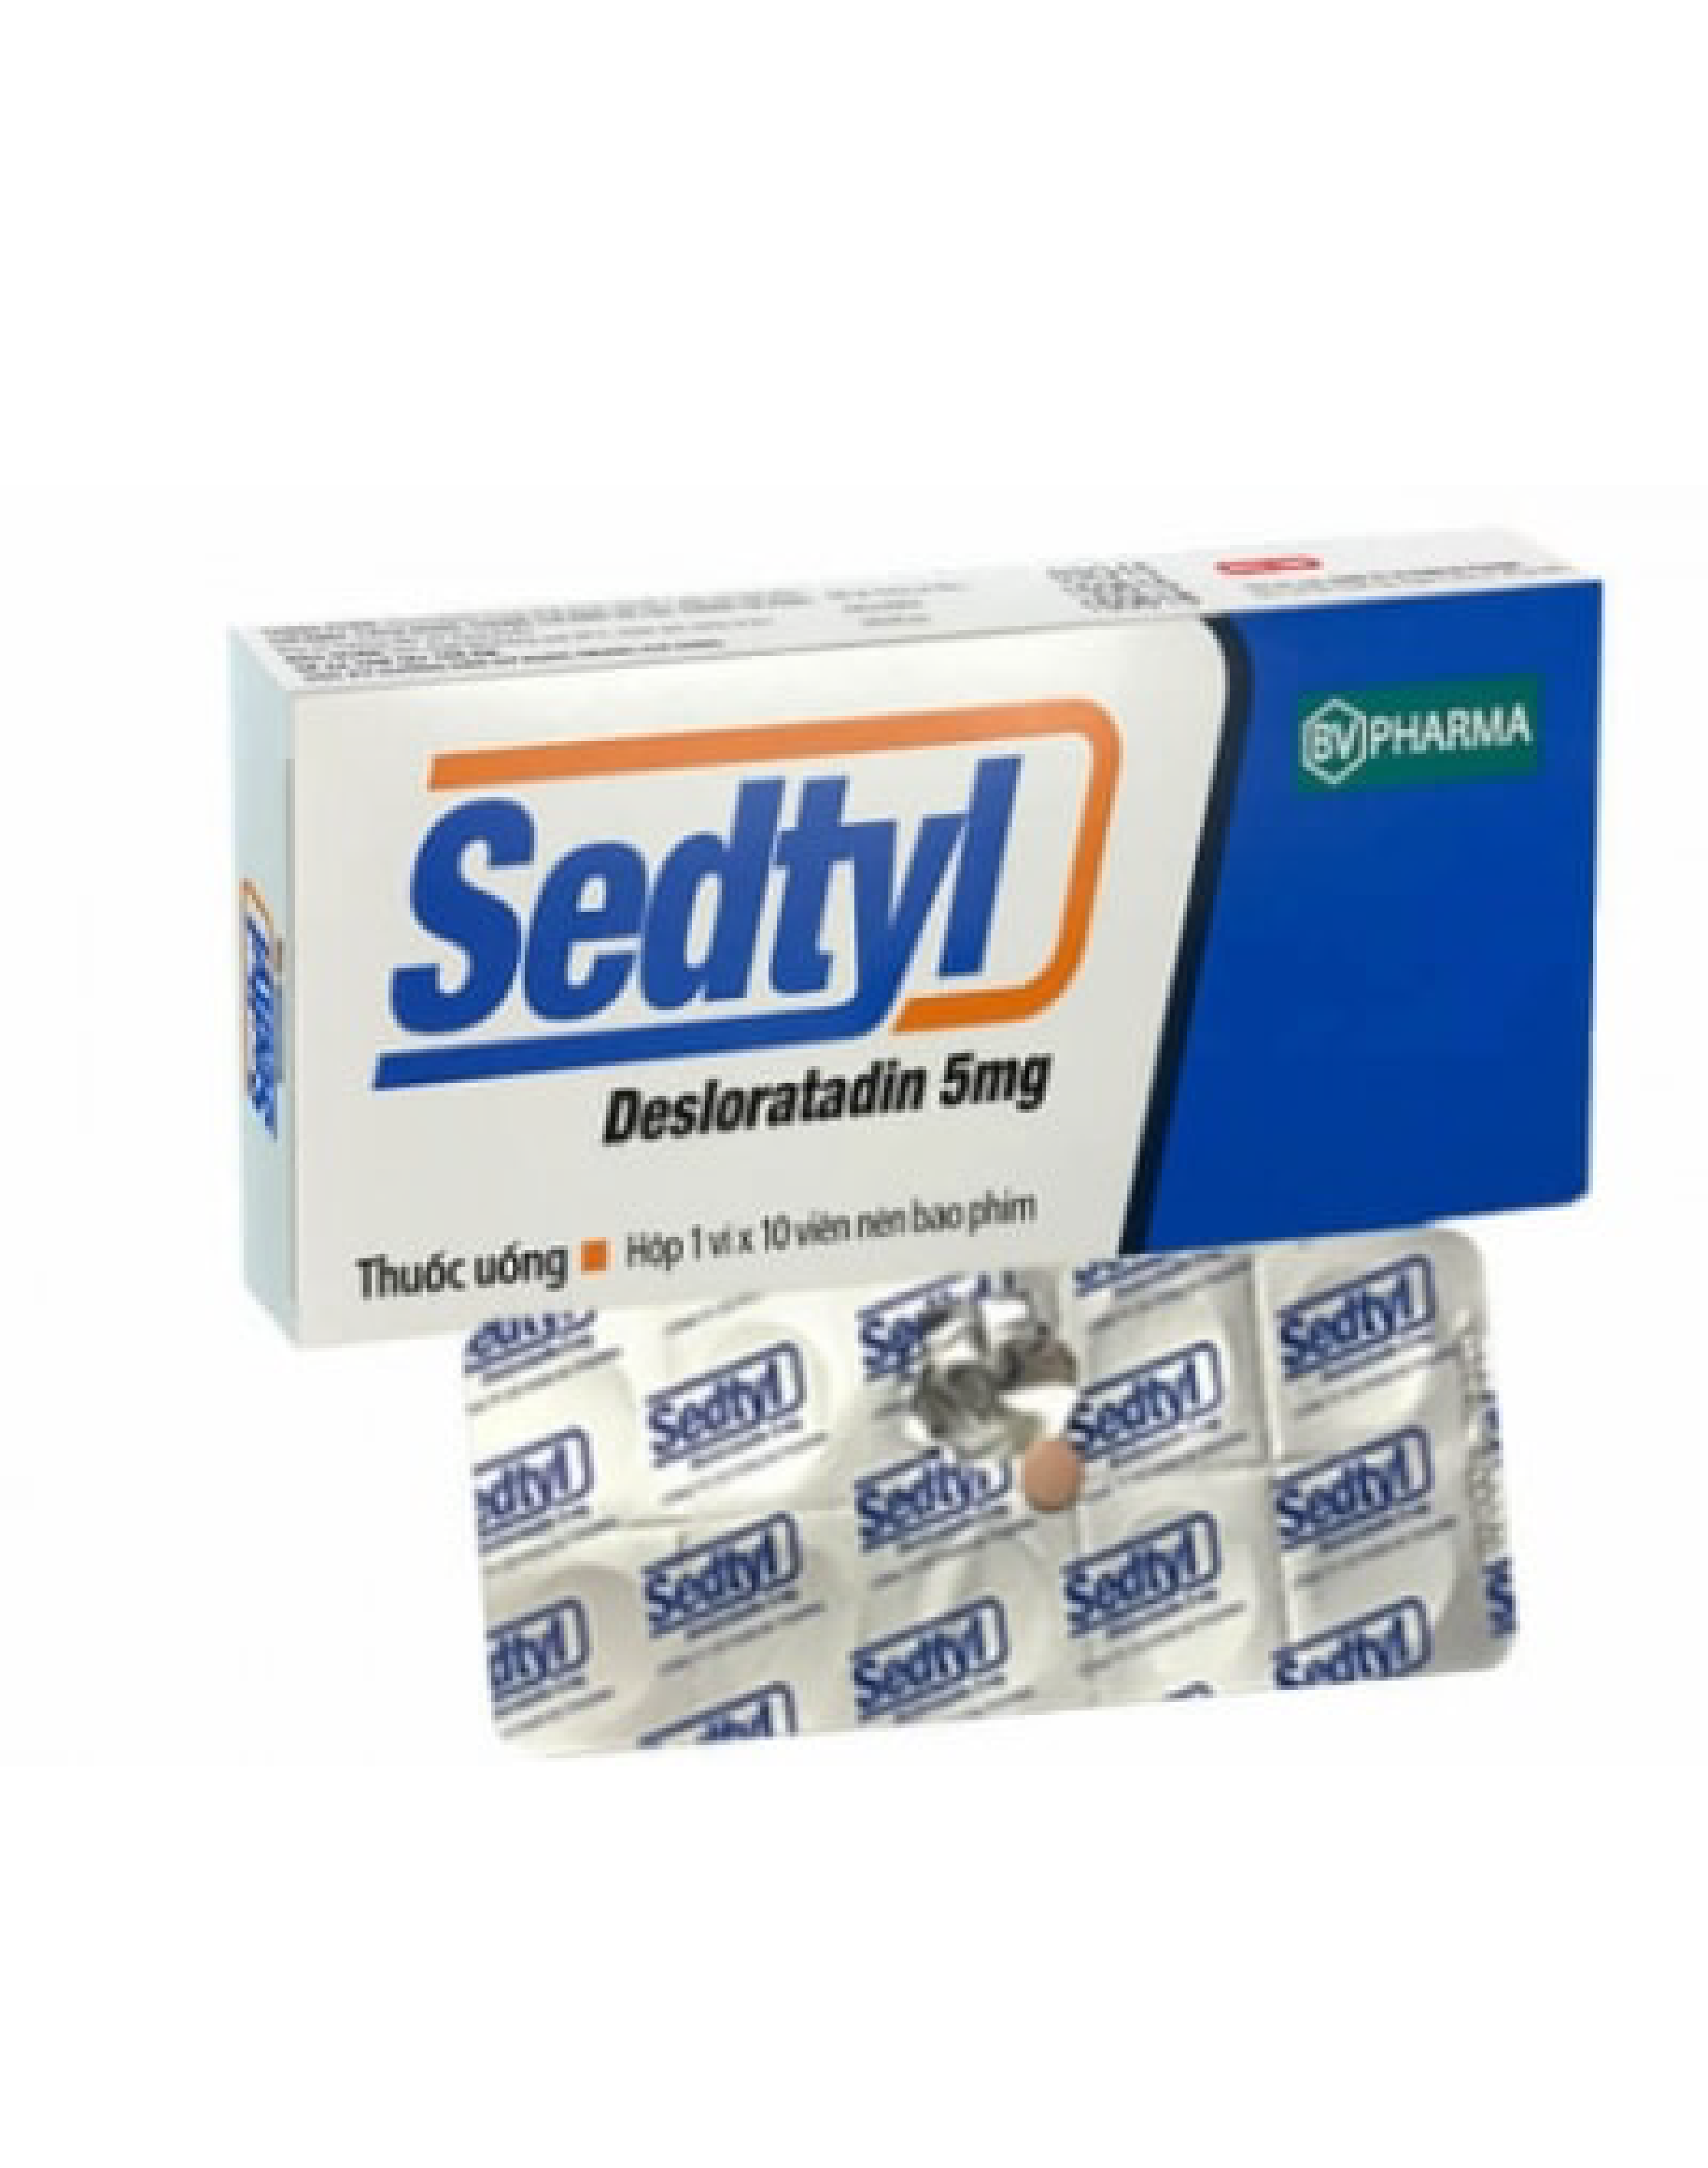 Sedtyl (Desloratadin) 5mg BV Pharma (H/10v)